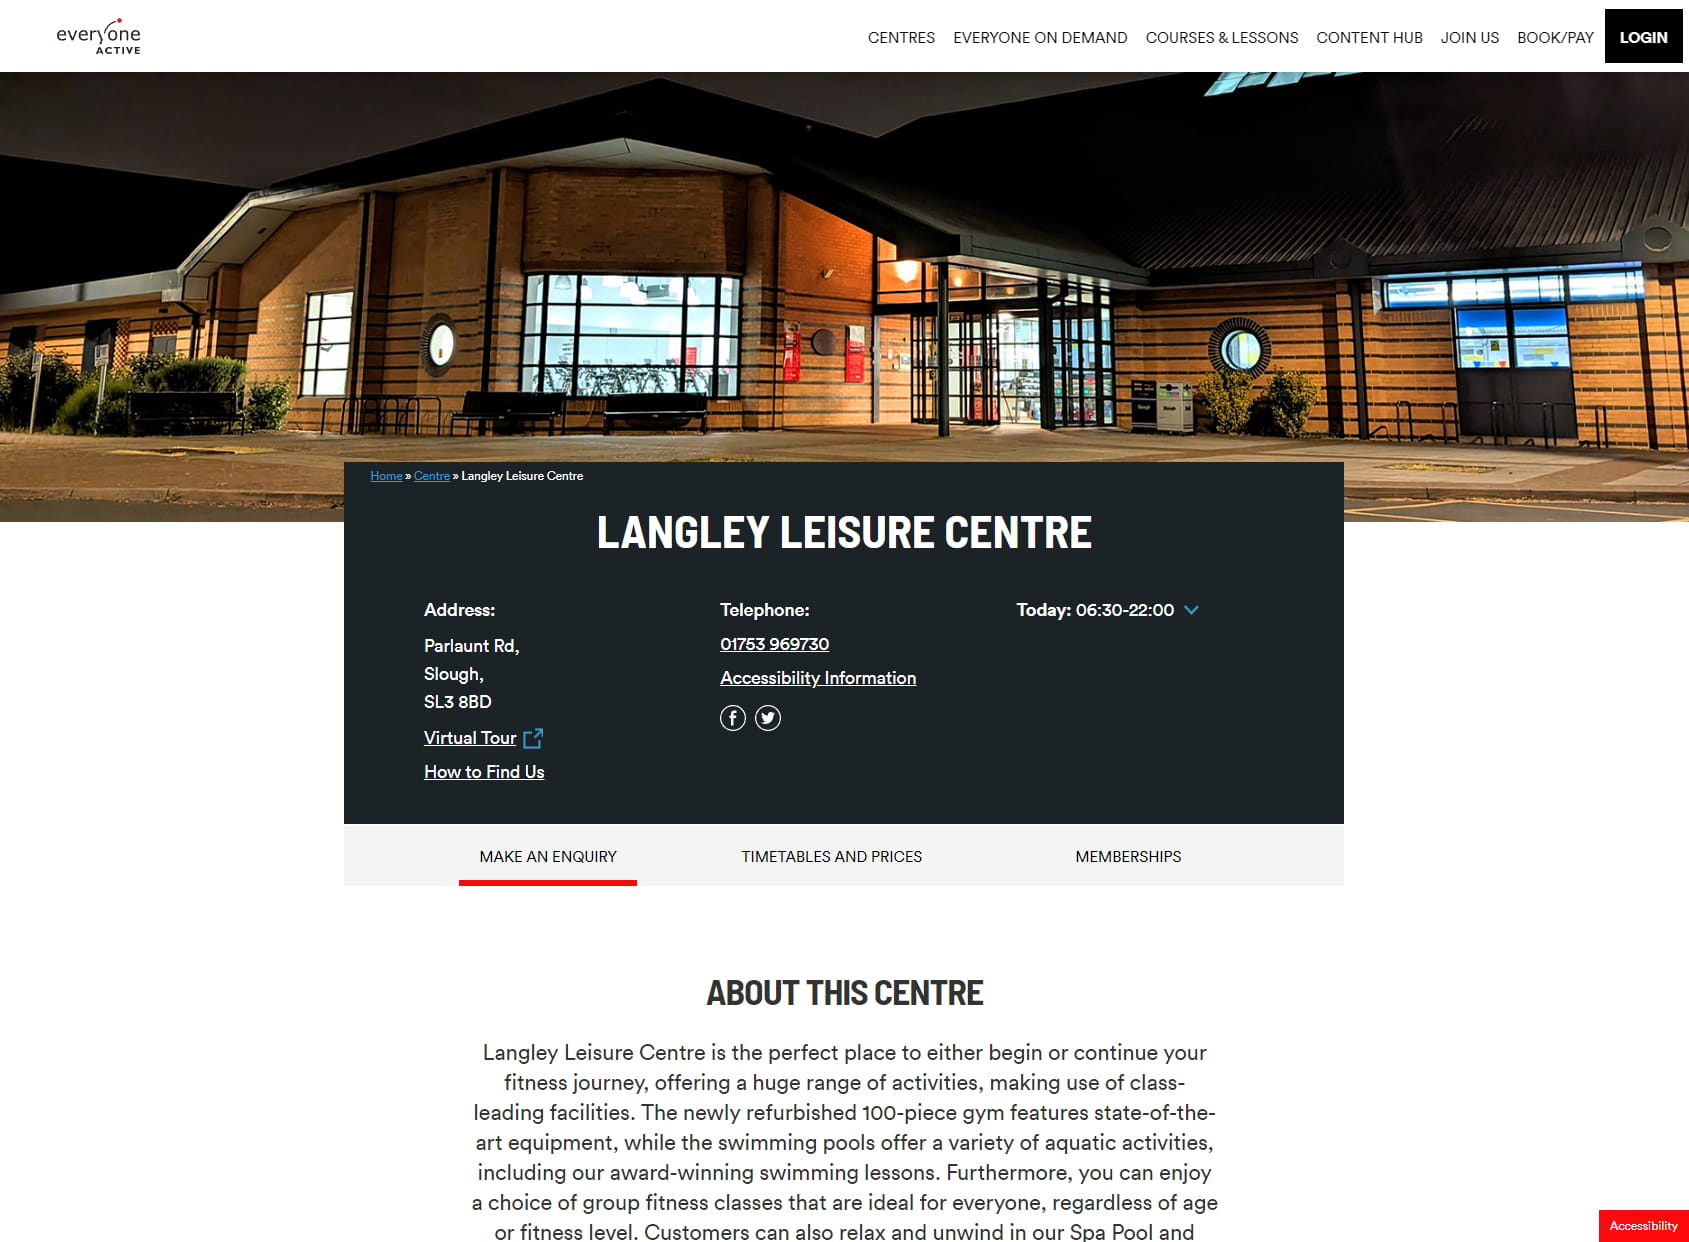 Langley Leisure Centre